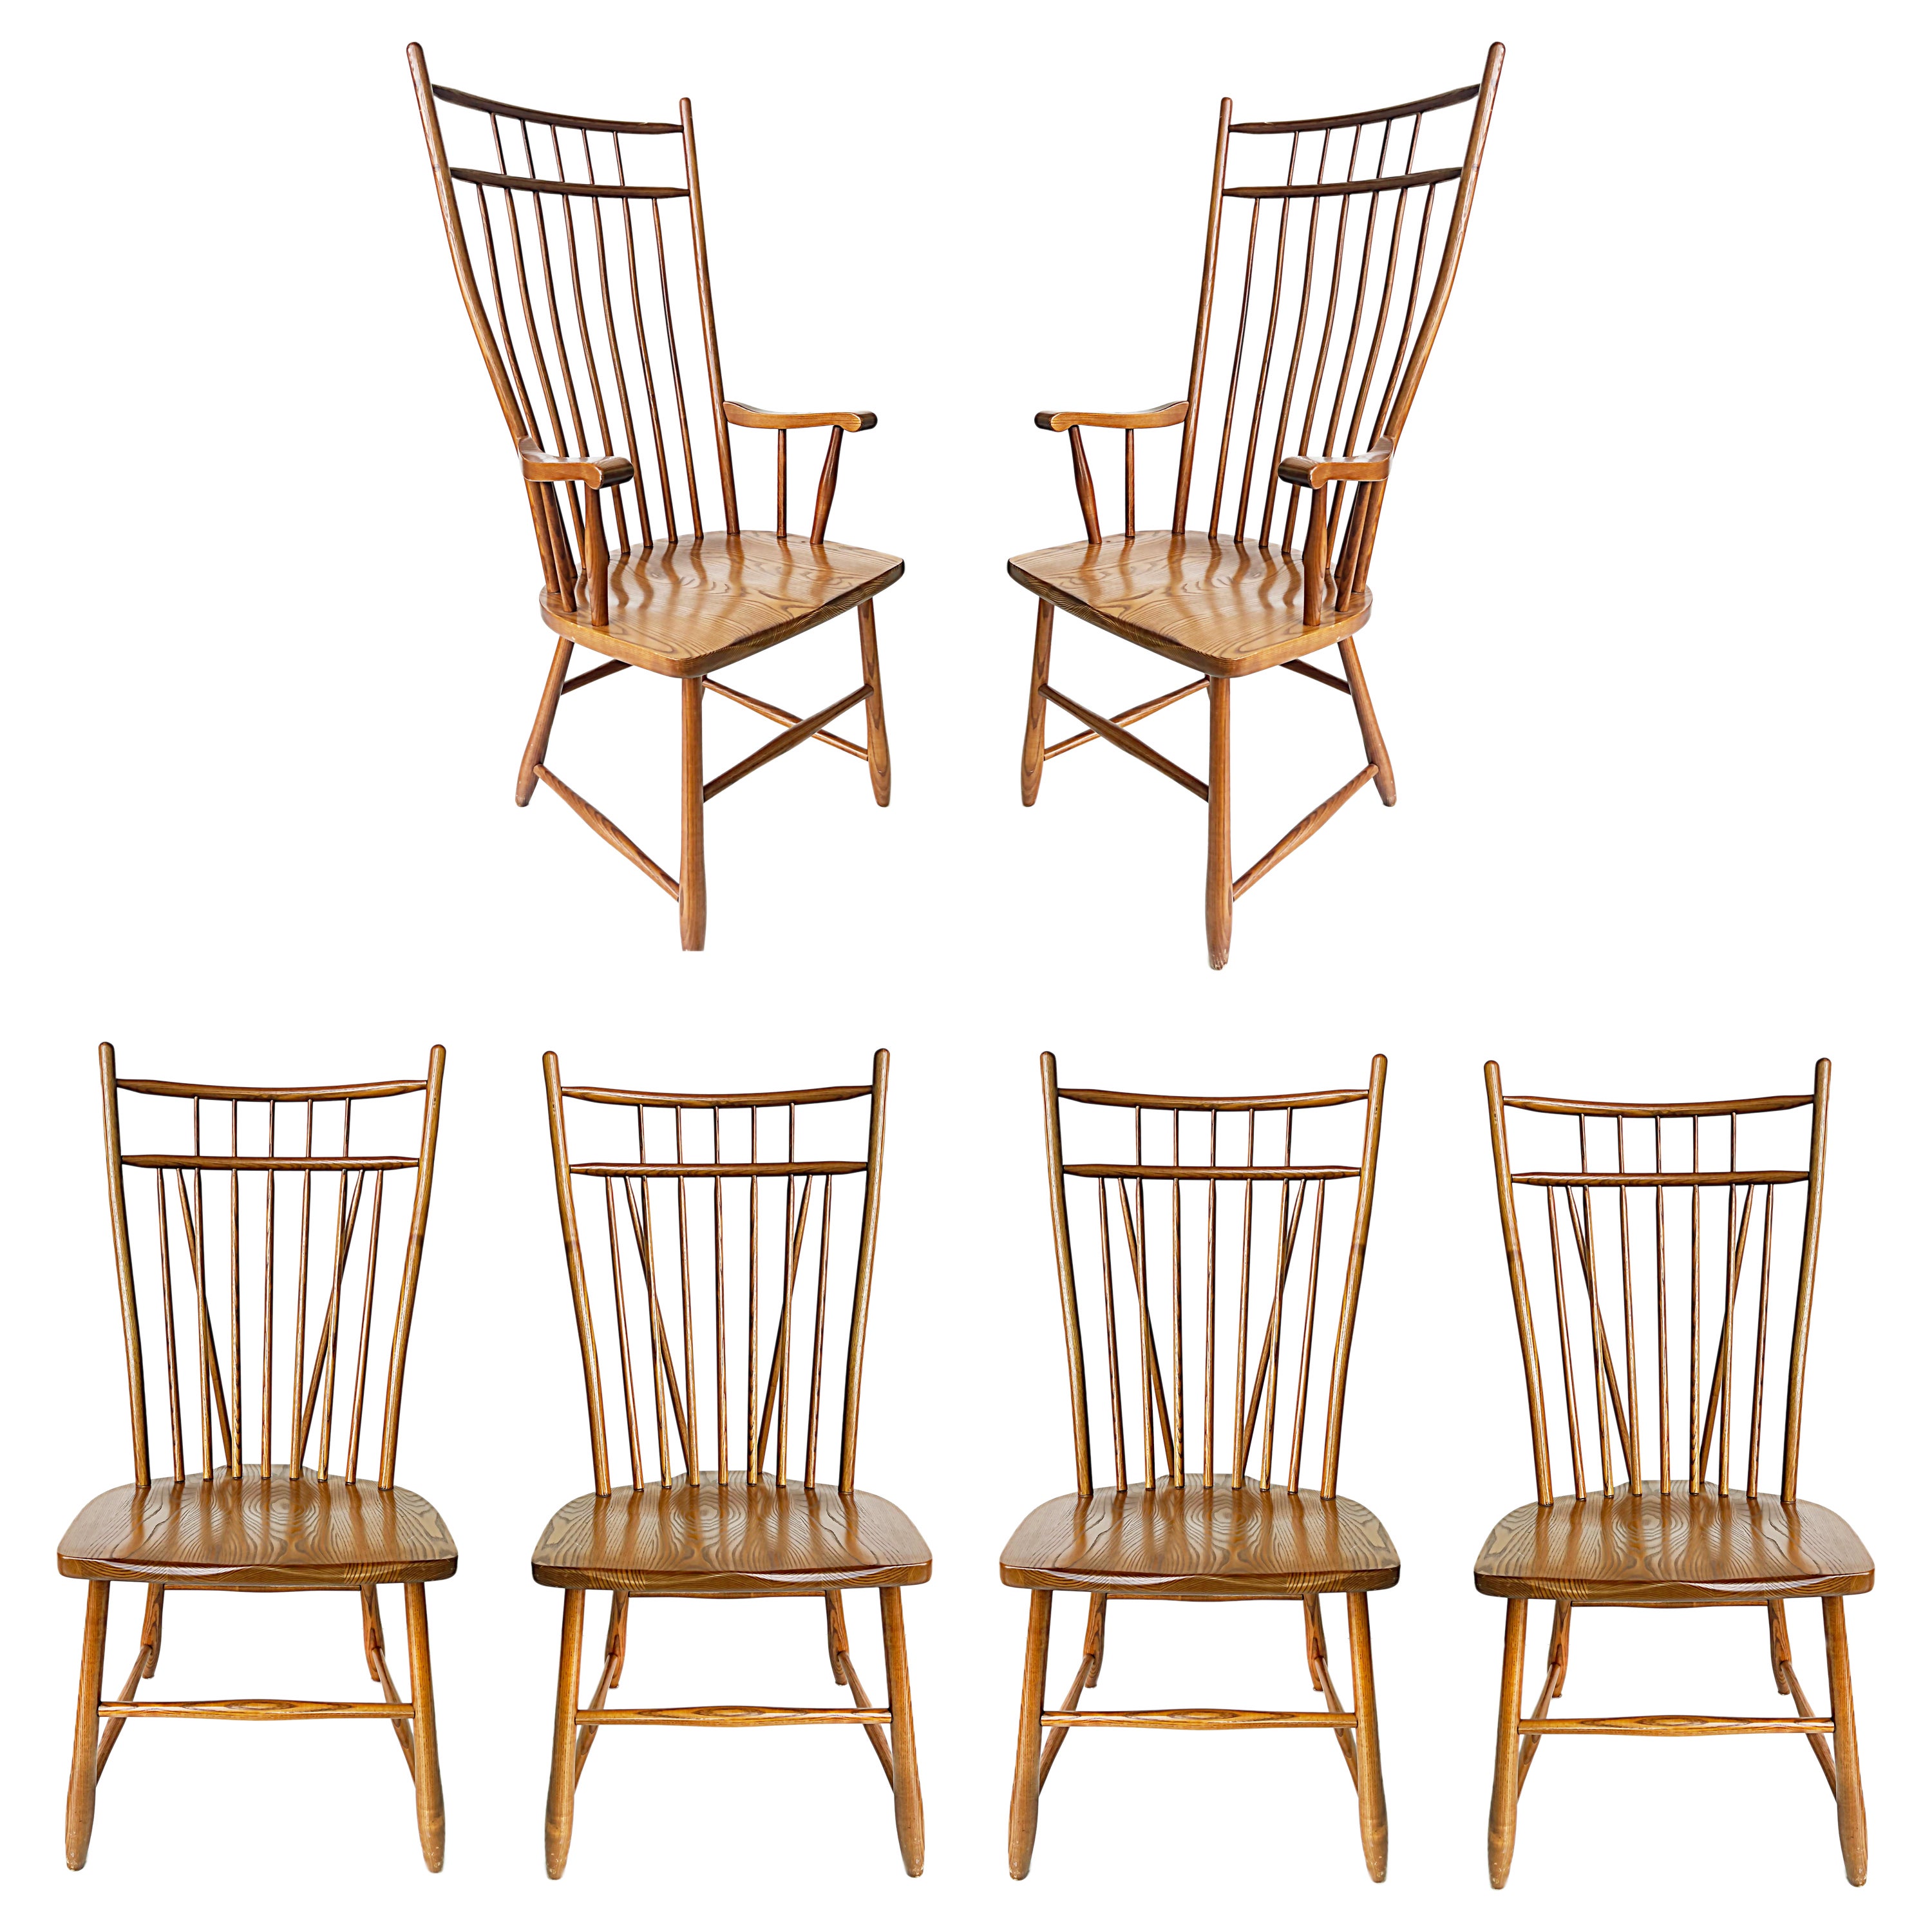 S Bent Bros. Vintage Modern Windsor Chairs, Set of 6, 1960s